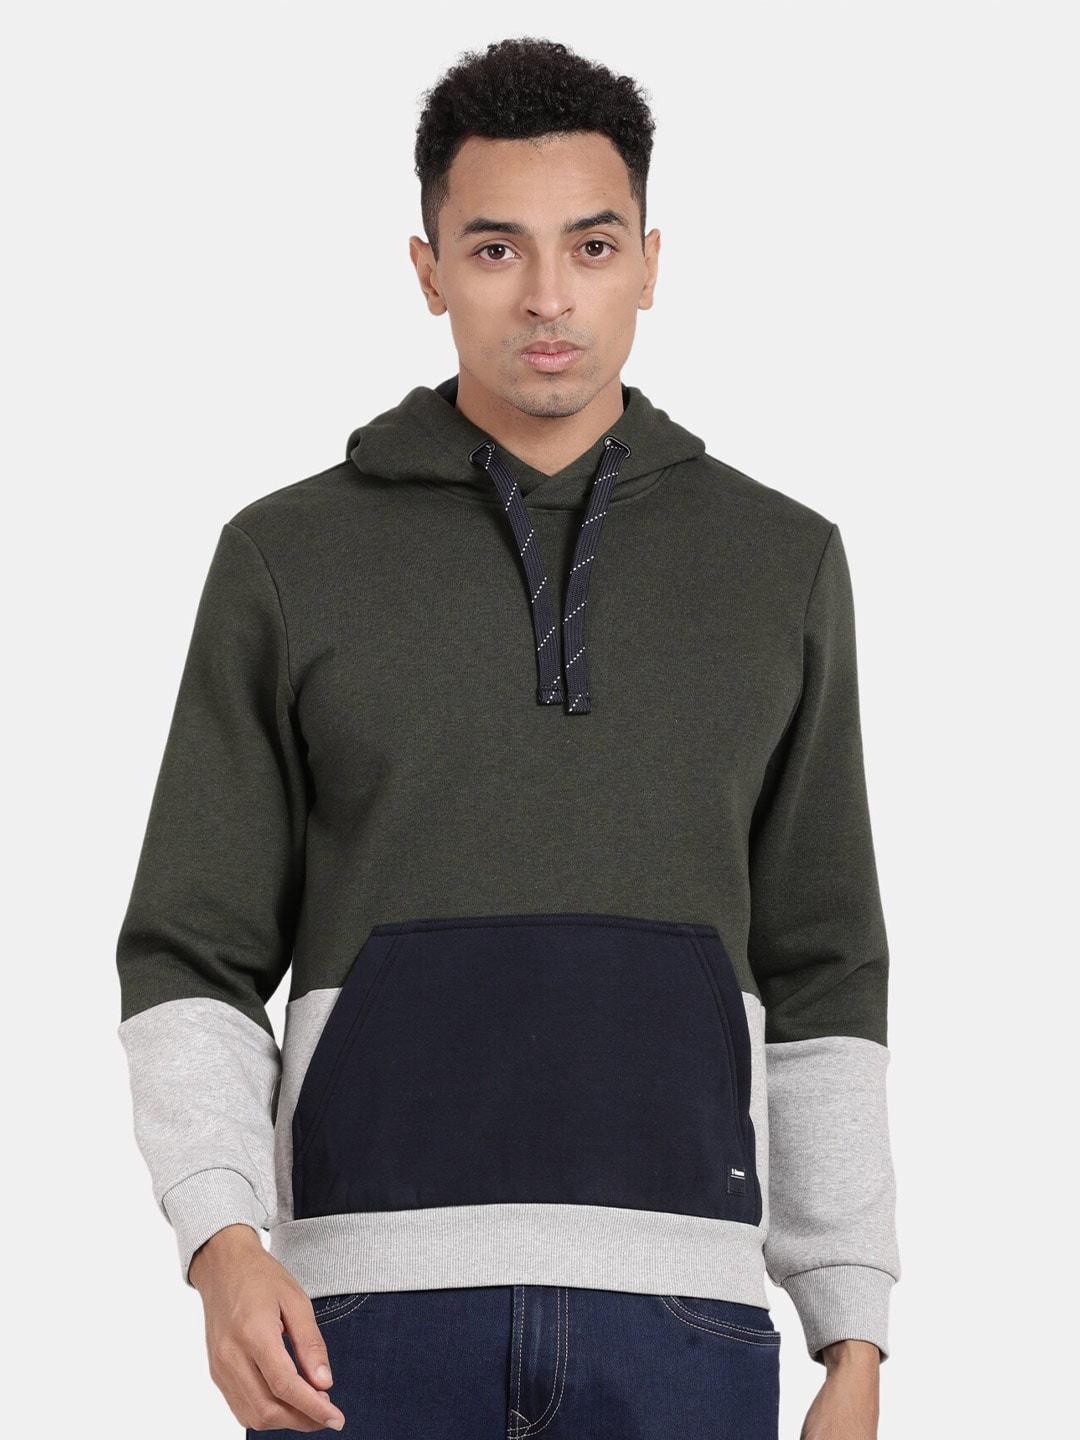 t-base colourblocked hooded pullover sweatshirt